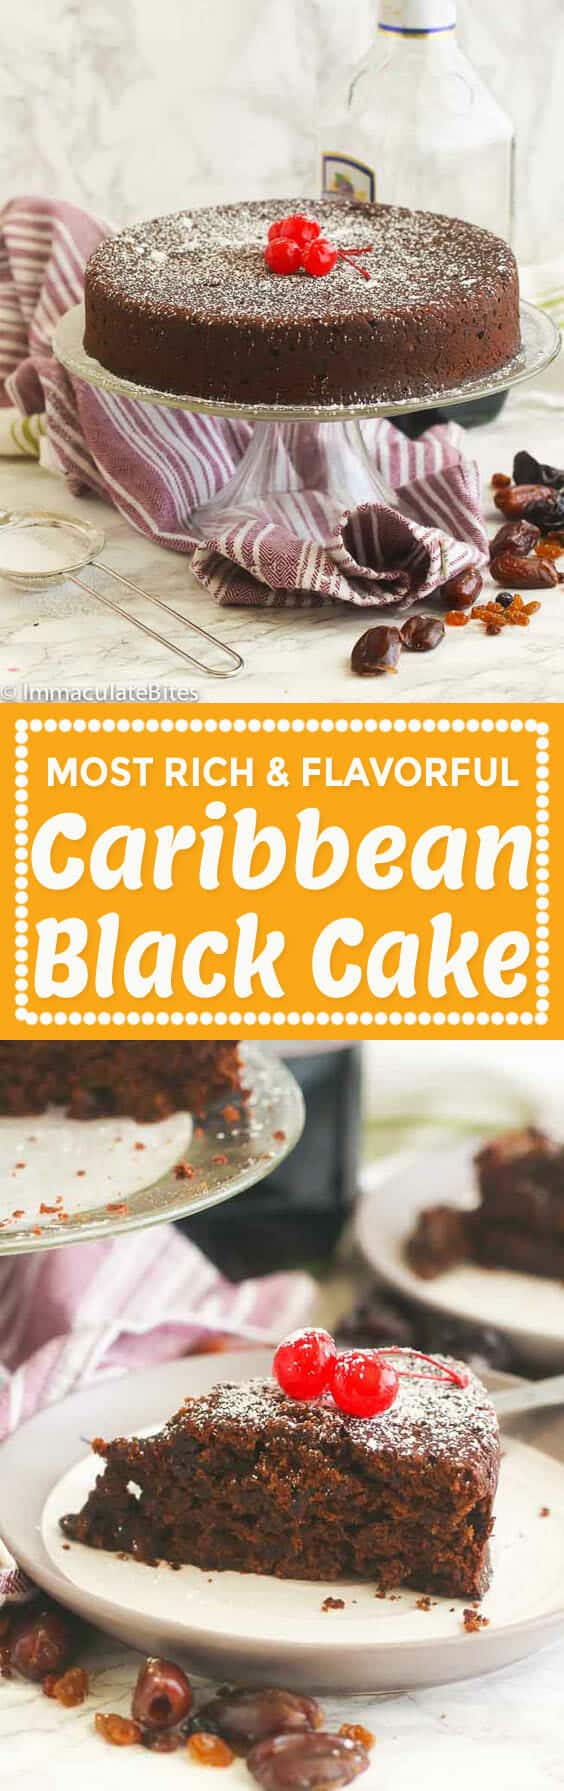 Caribbean Black Cake